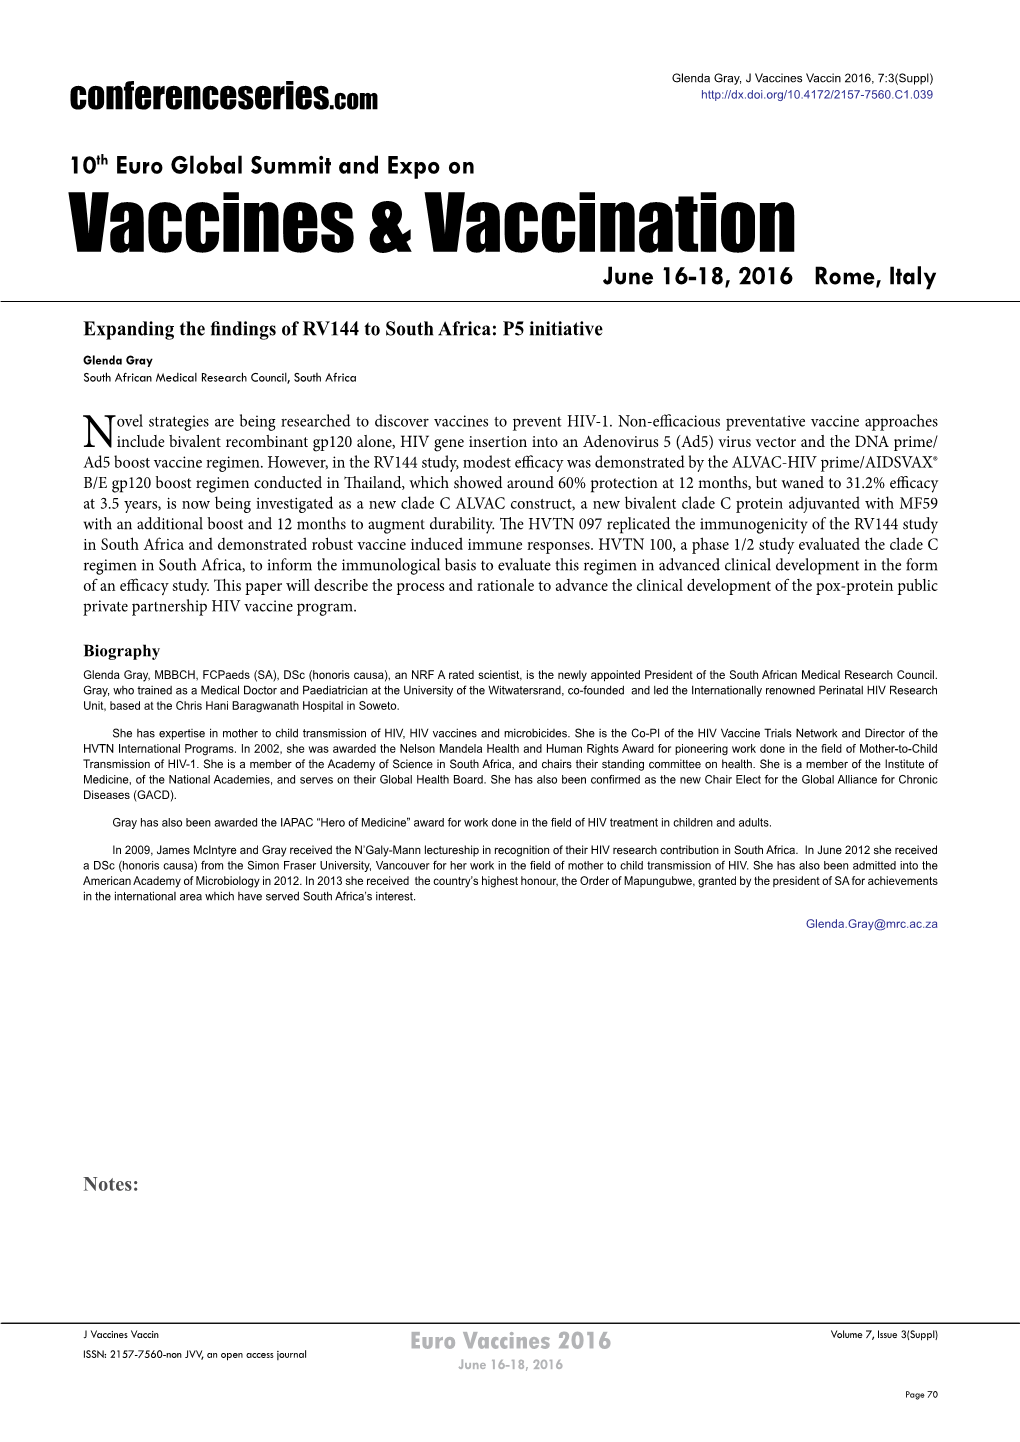 Vaccines & Vaccination